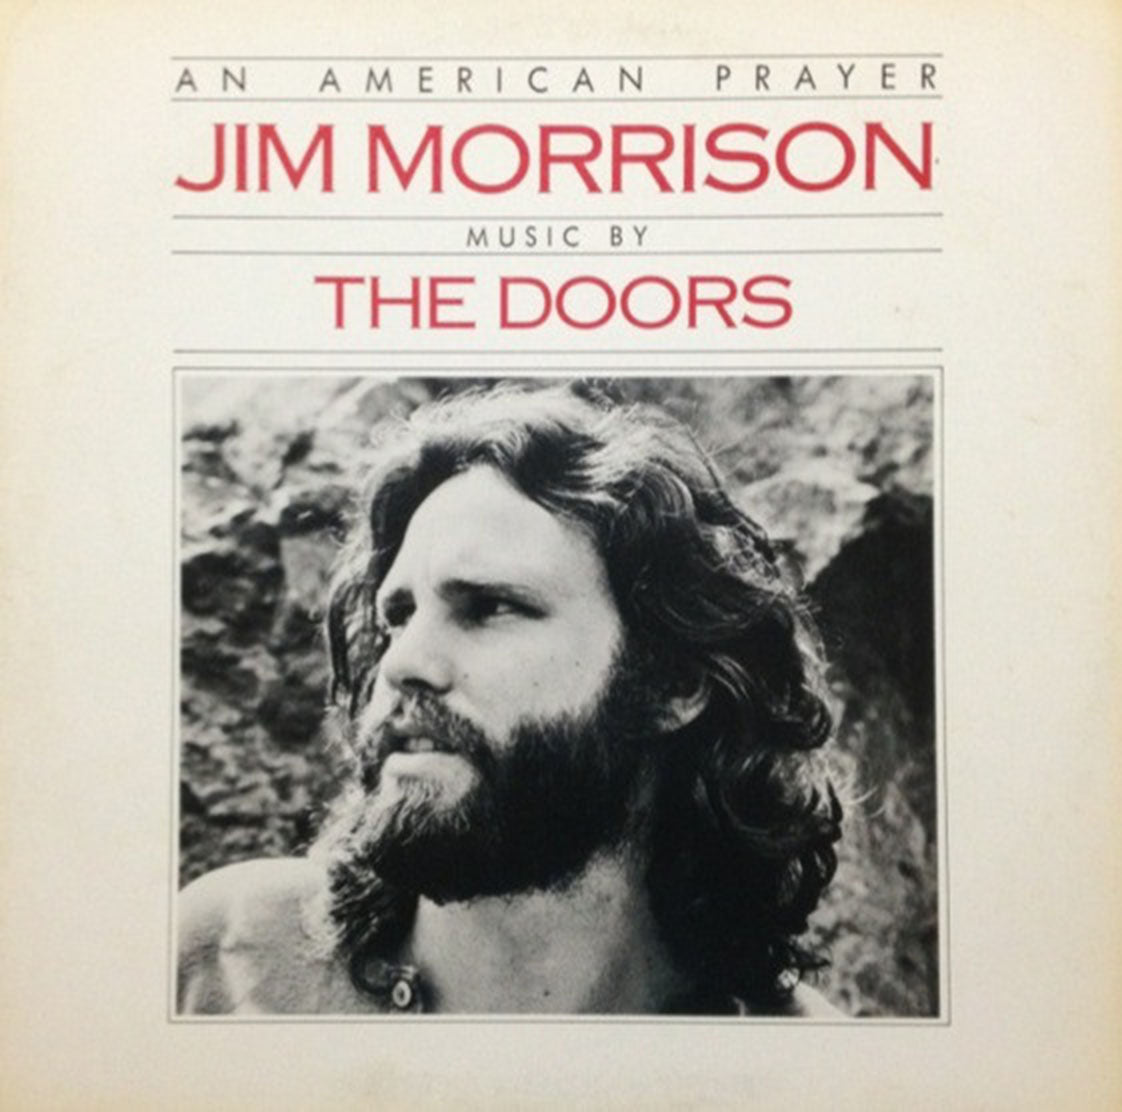 Jim Morrison Music By The Doors – An American Prayer - 1979